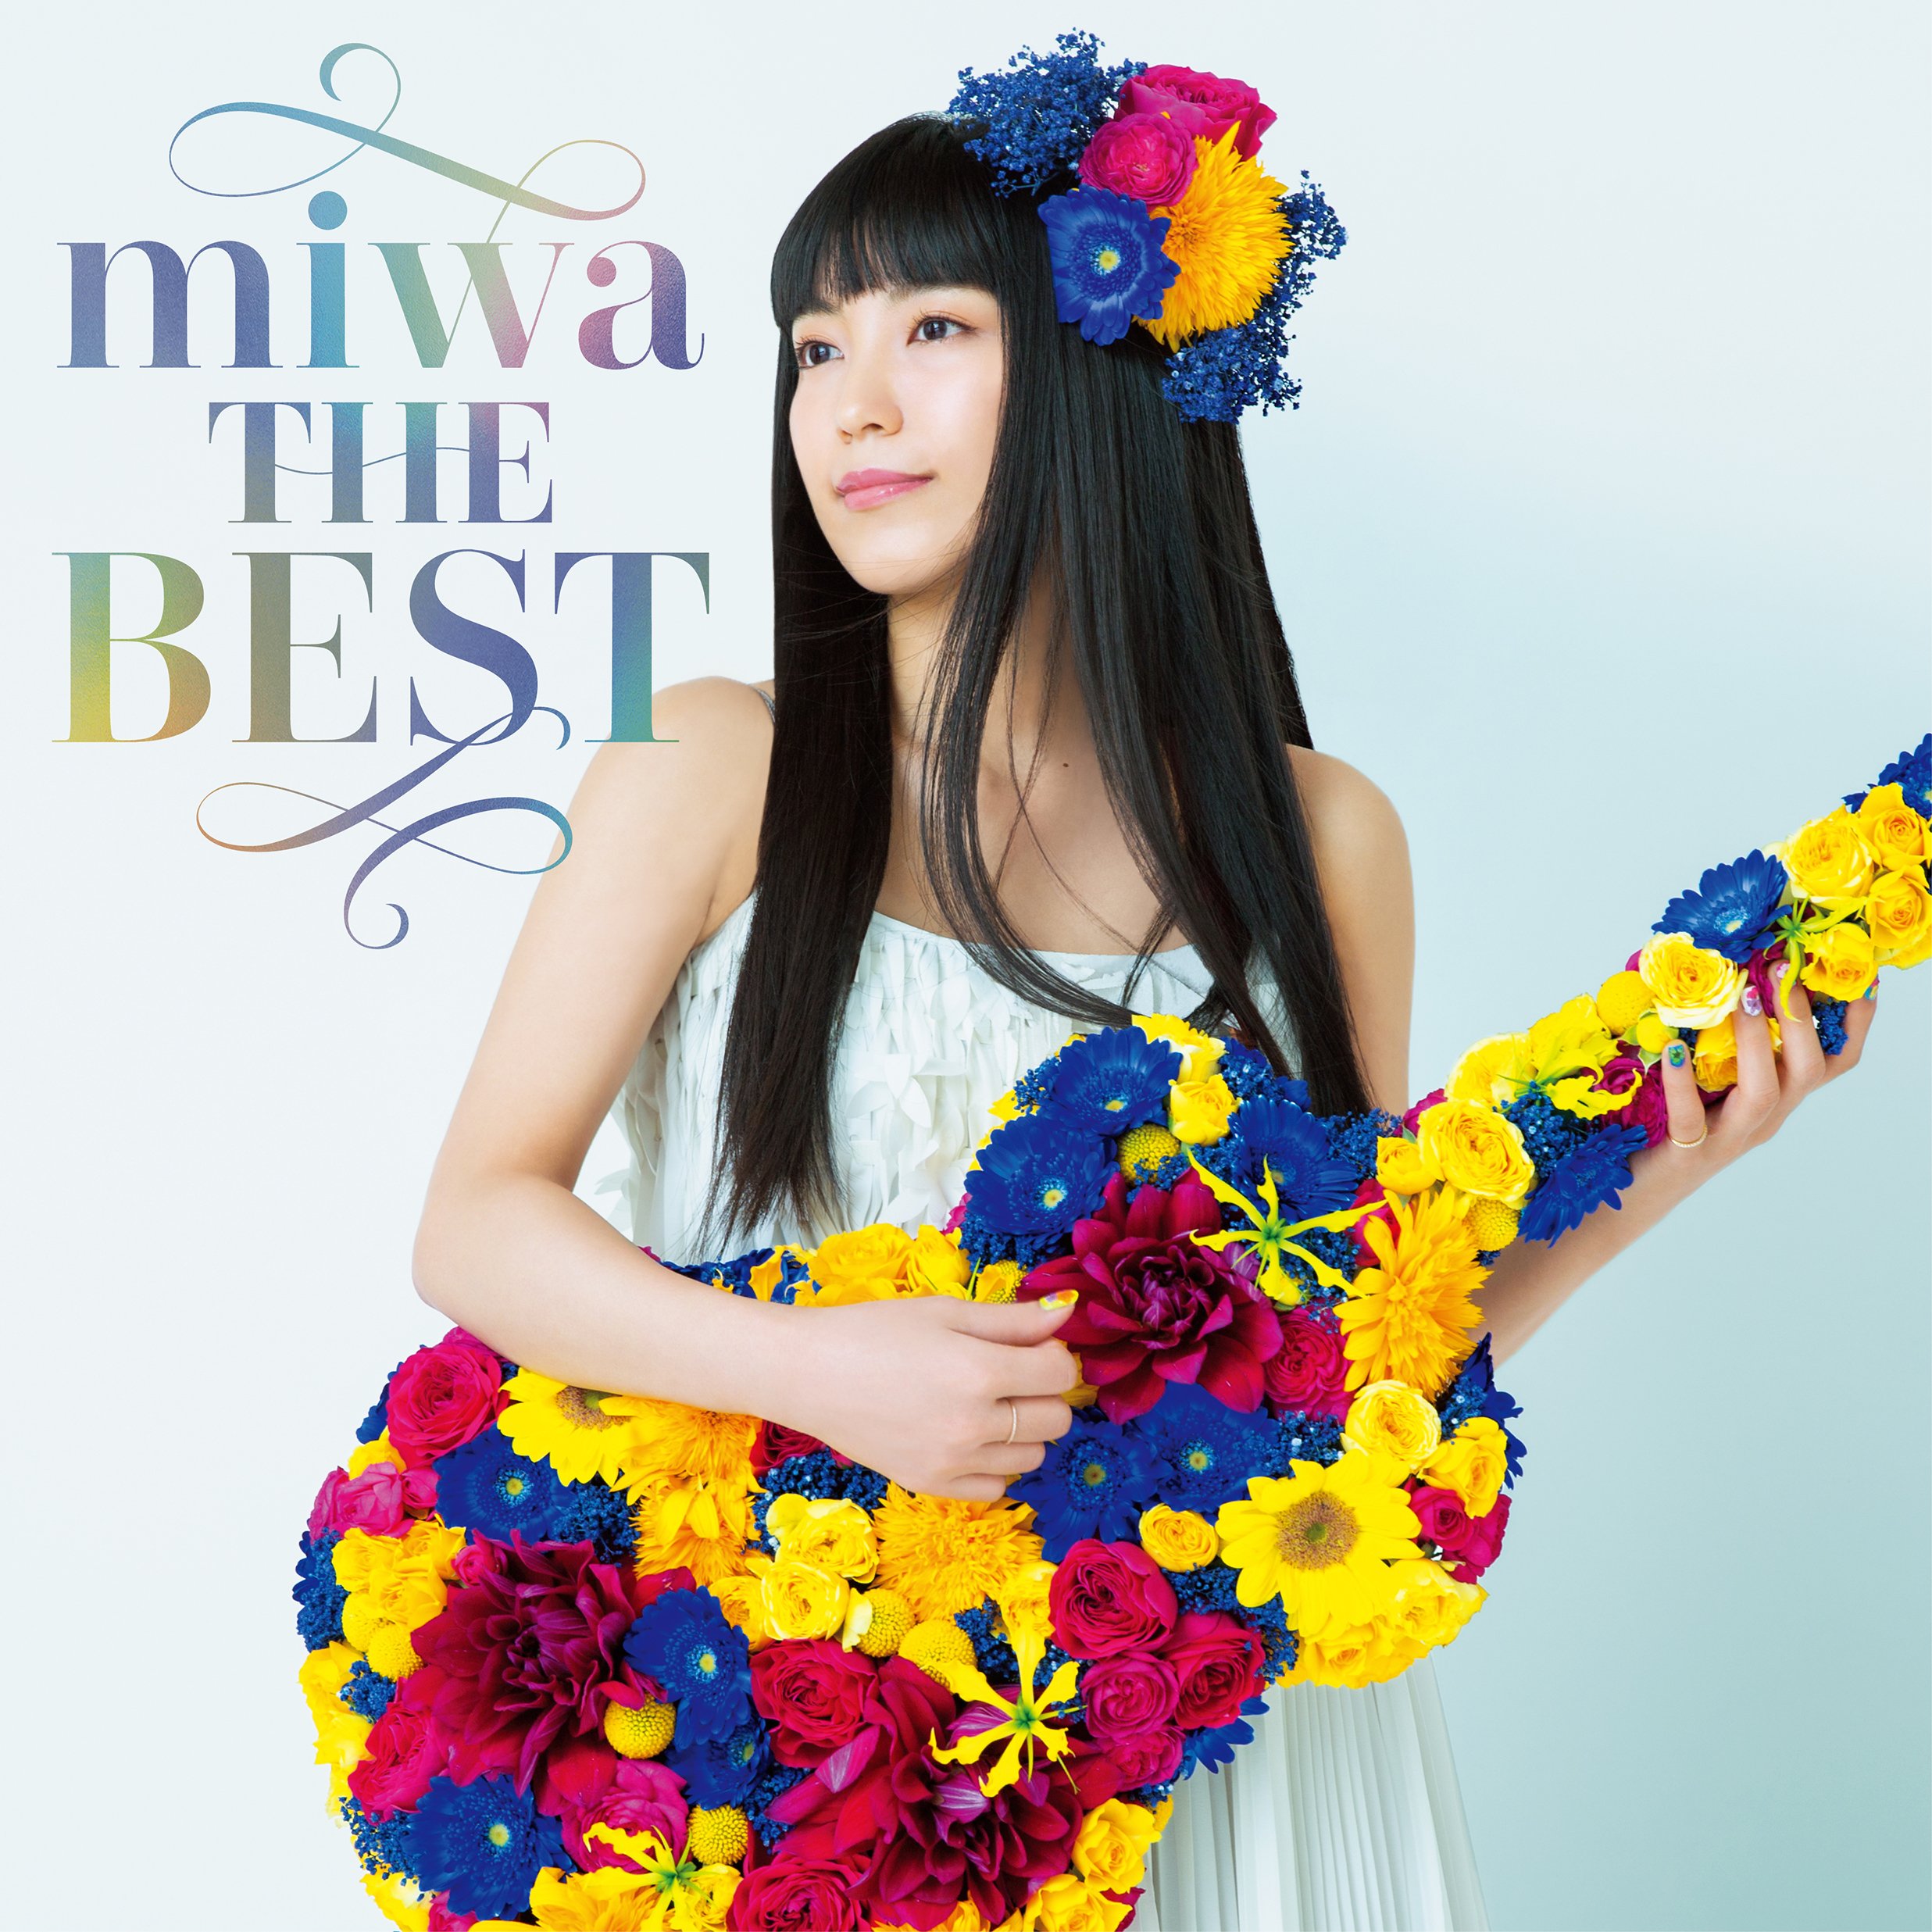 miwa - miwa THE BEST [FLAC + MP3 320 + Blu-ray ISO] [2018.07.11]